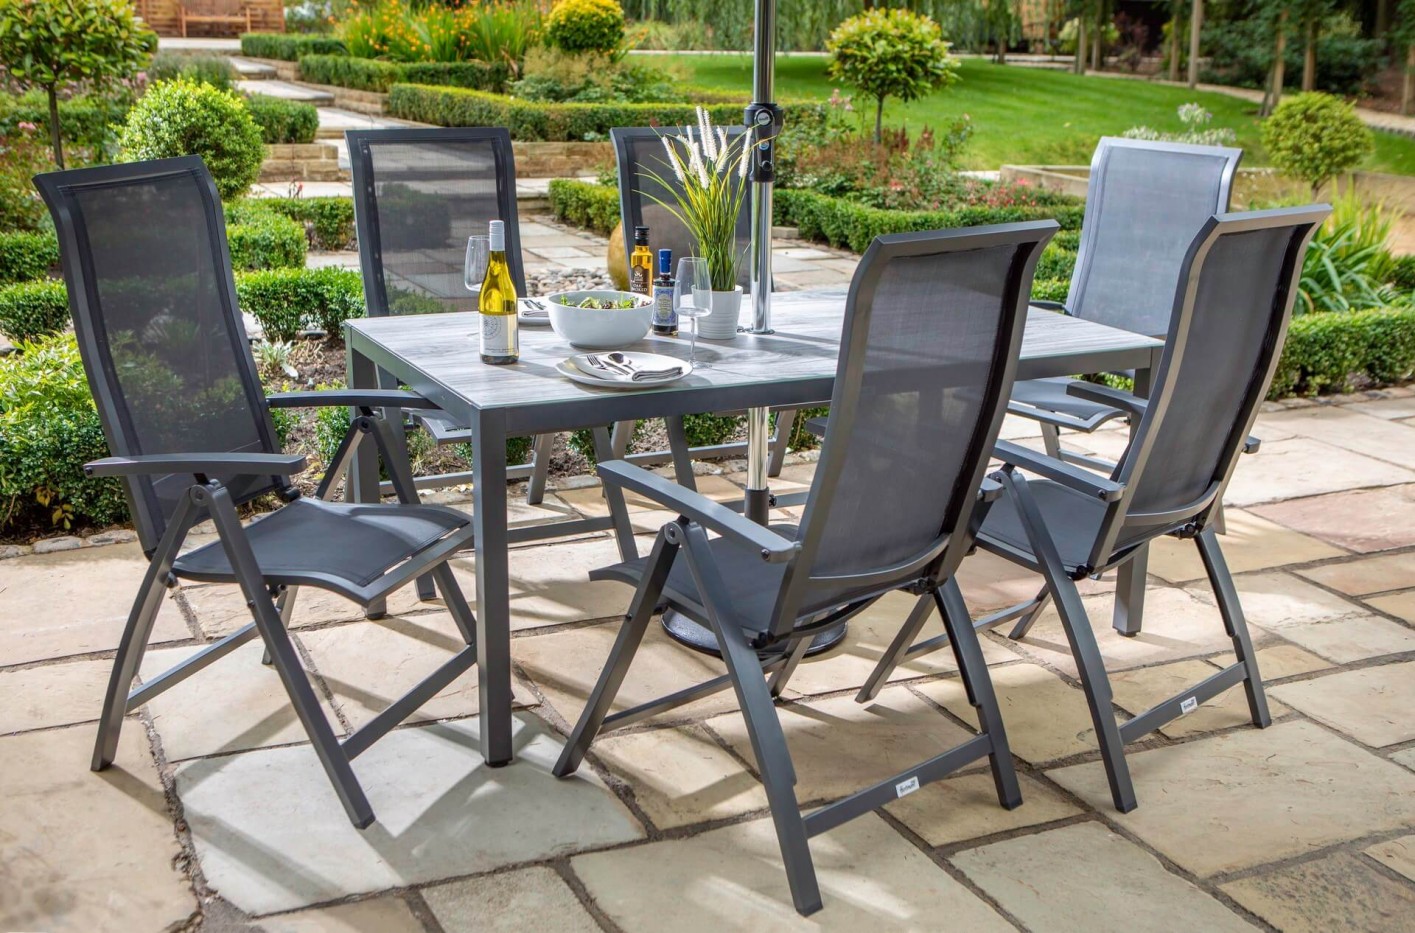  aluminium garden furniture sale